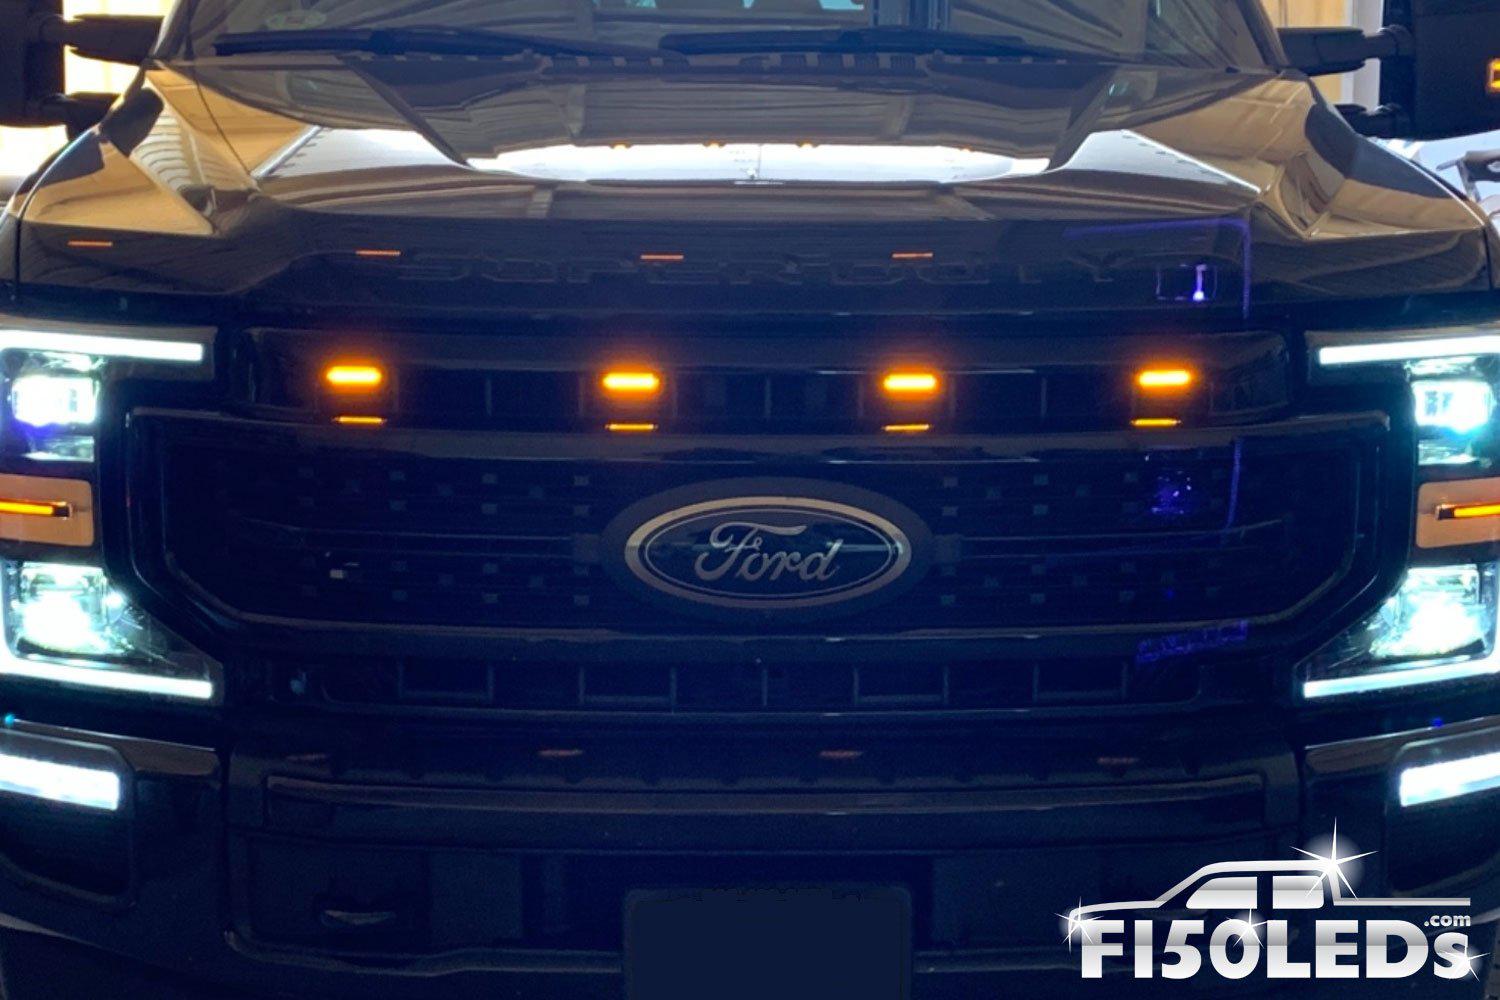 Ford F150 2015 - 2020 Raptor Style Extreme Amber LED grill Kit-F150LEDs.com